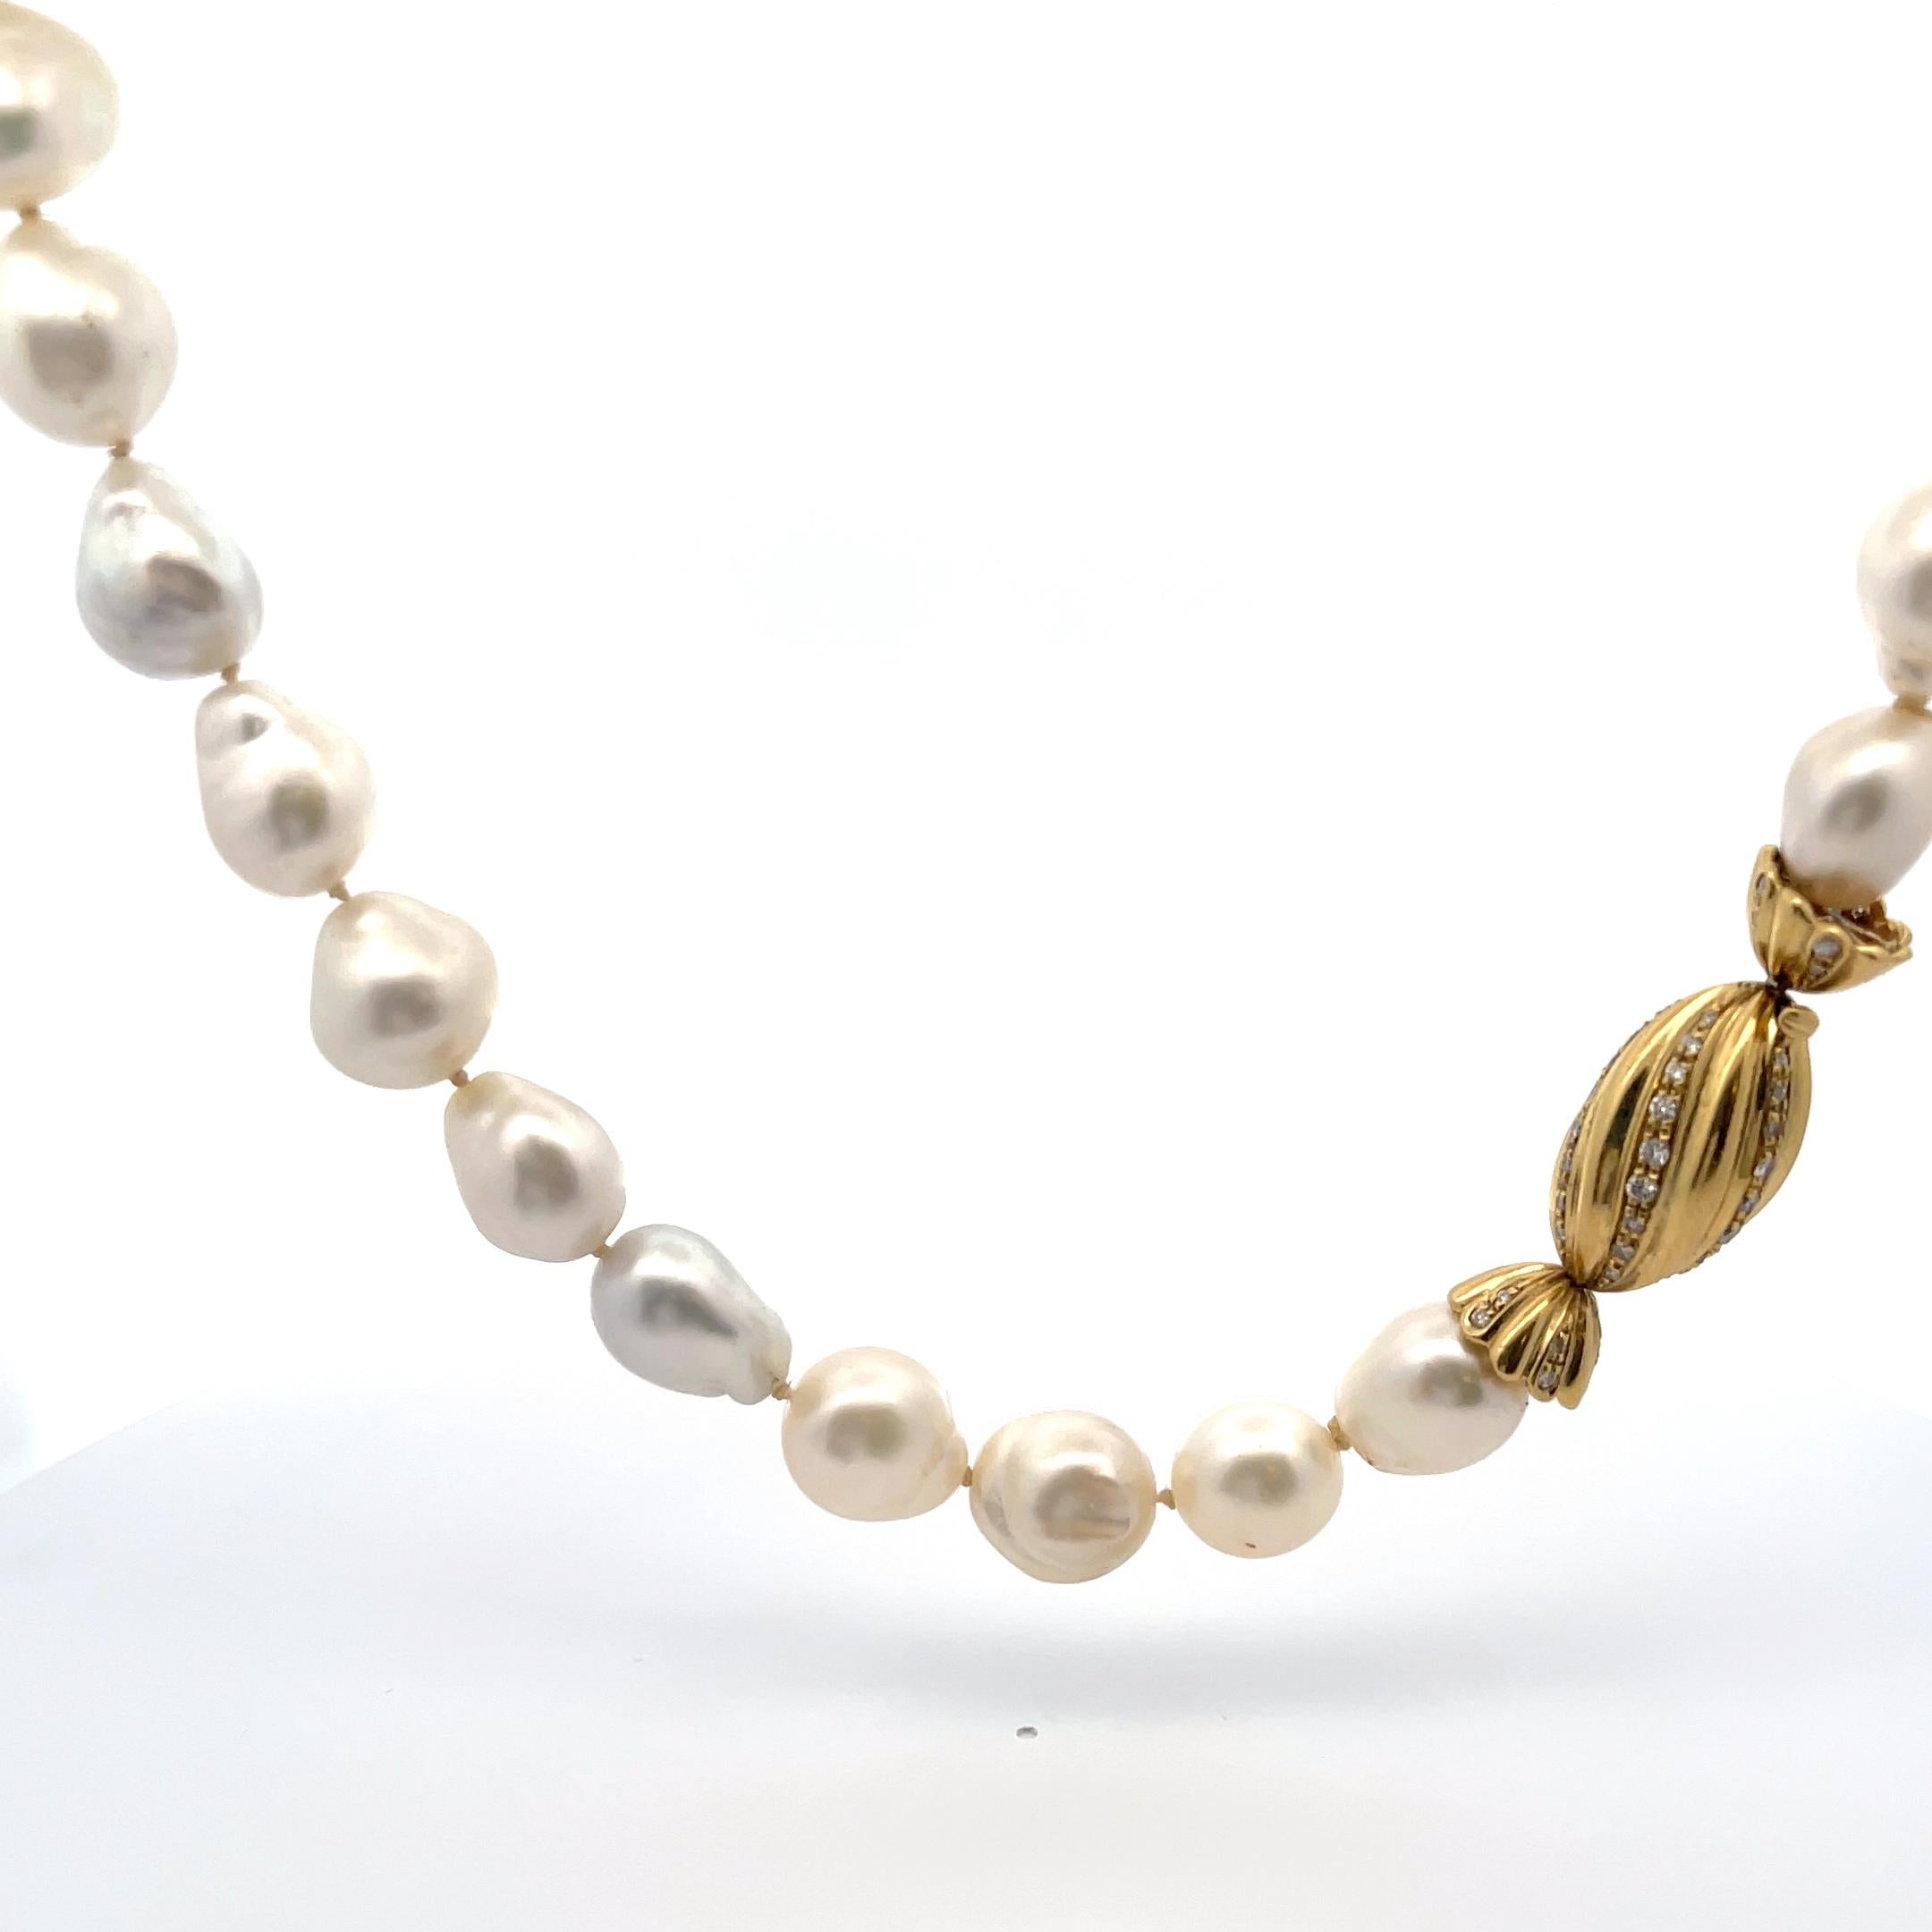 South Sea White Baroque Pearl Necklace 18K Yellow Gold Diamond Clasp In Good Condition For Sale In Dallas, TX